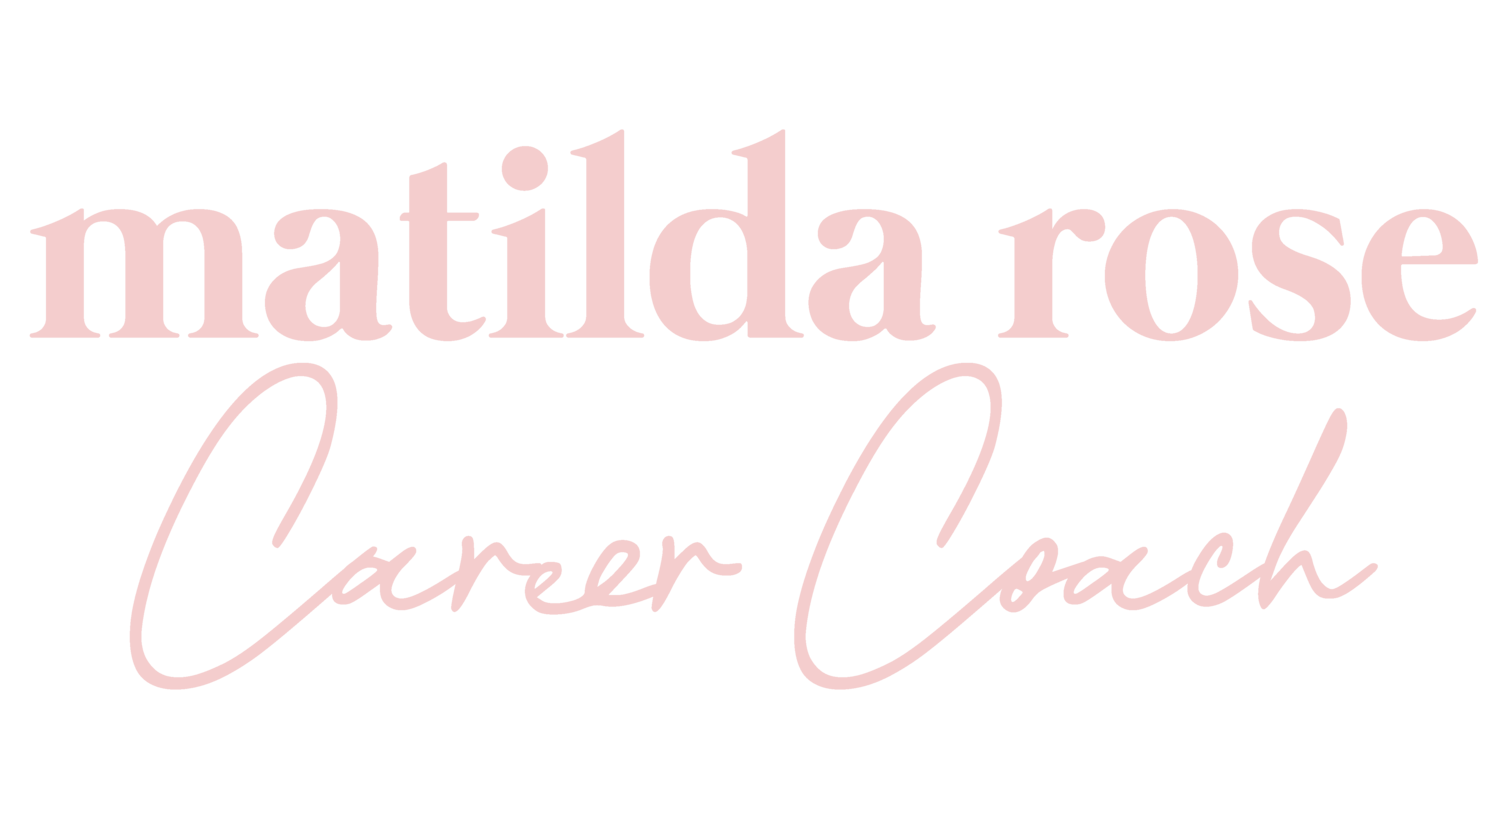 Matilda Rose Career Coach